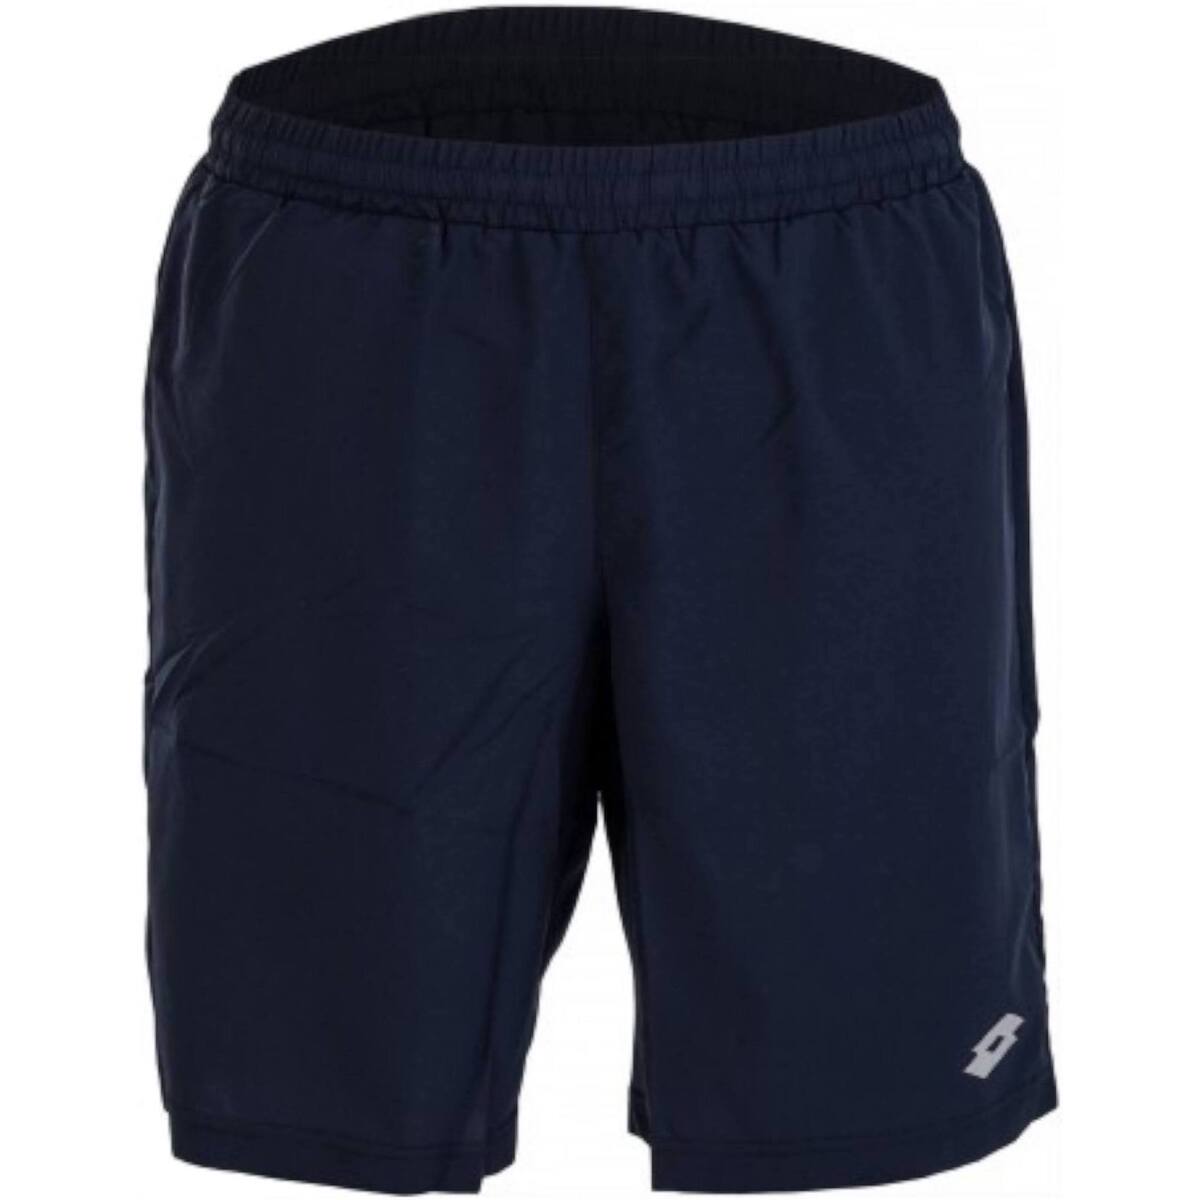 Textil Homem Shorts / Bermudas Lotto S5651 Azul